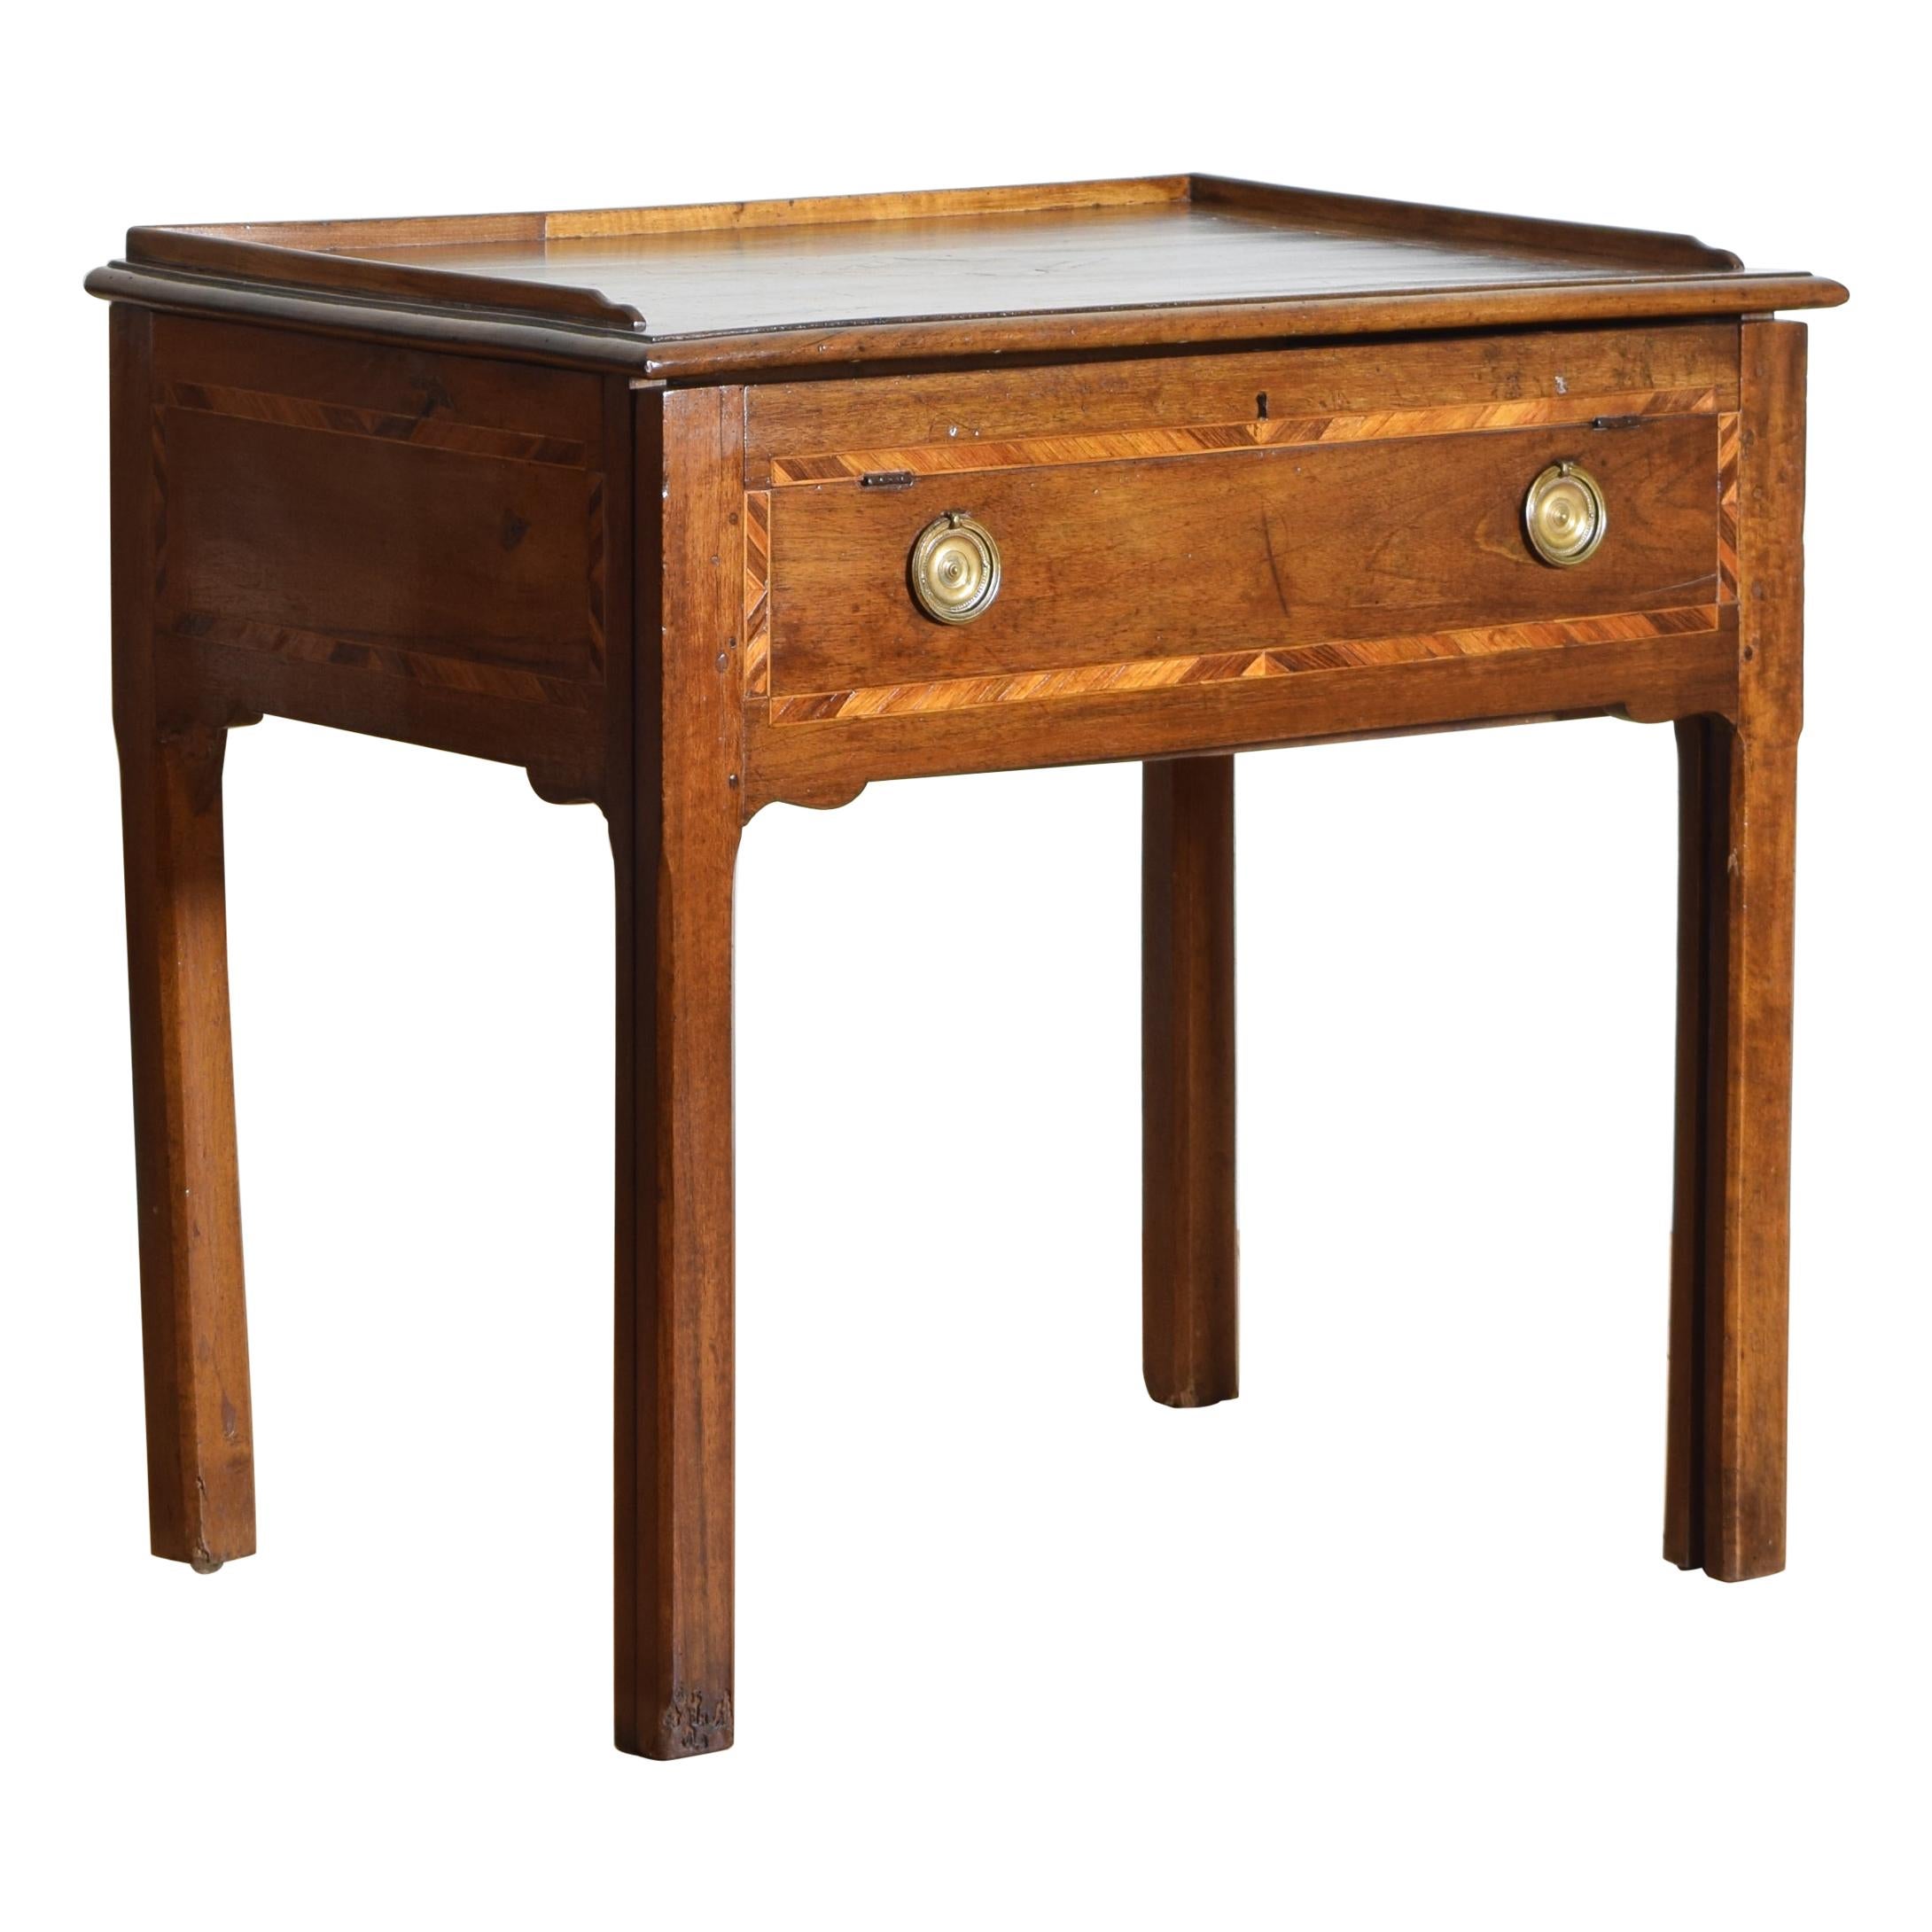 Italian, Toscana, Walnut and Inlaid Metamporhic Writing Table/Desk, circa 1800